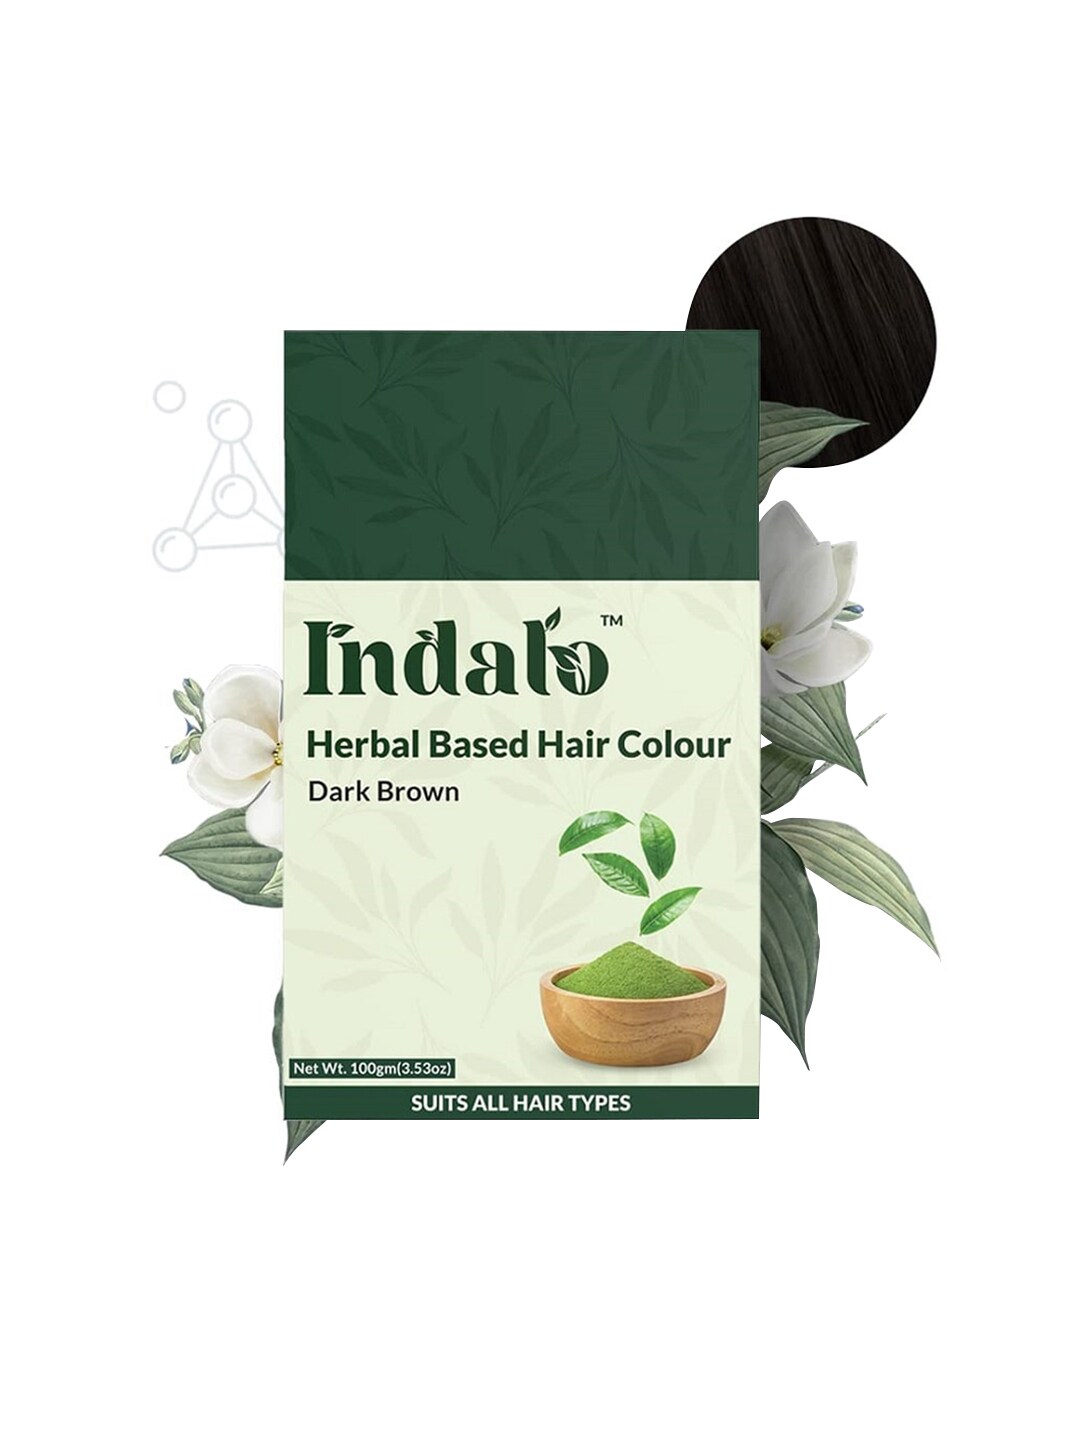 INDALO Natural Hair Colour Dark Brown 100gm Price in India